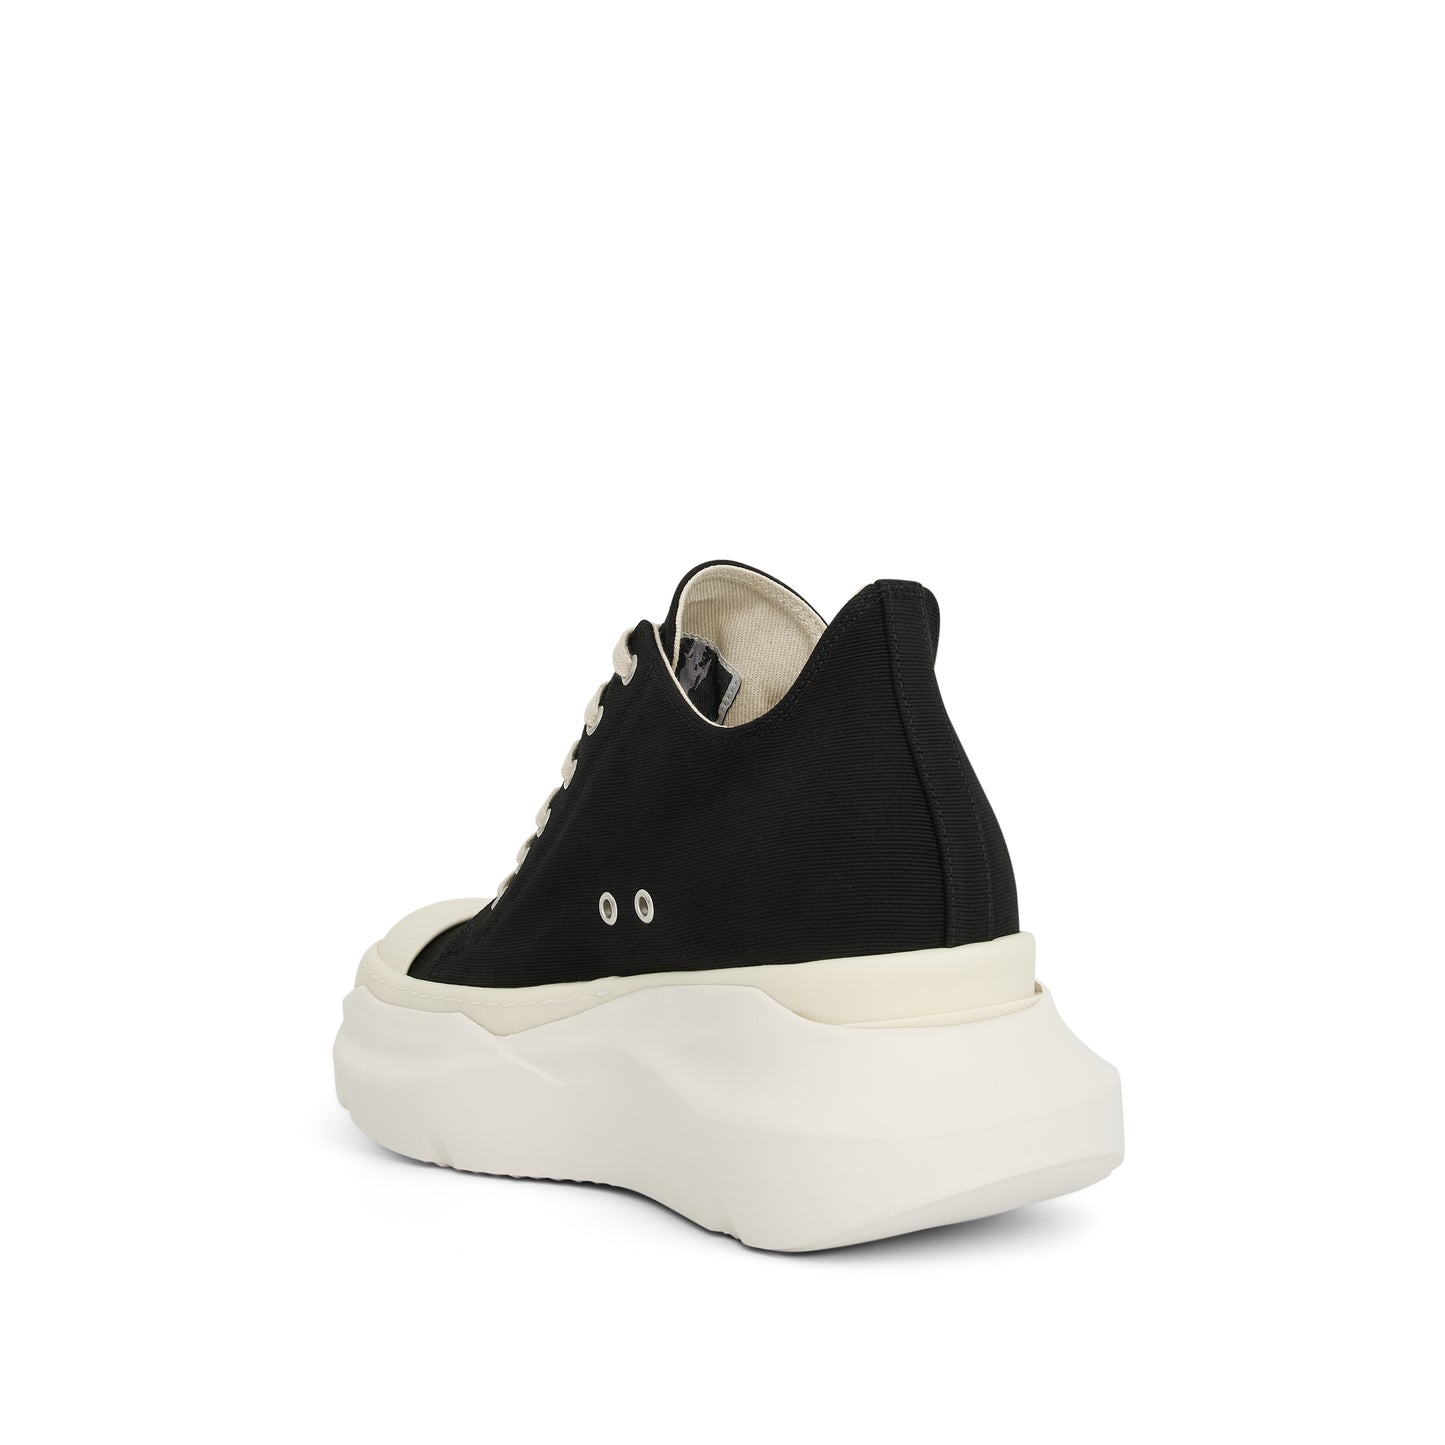 Abstract Low Top Sneaker in Black/Milk